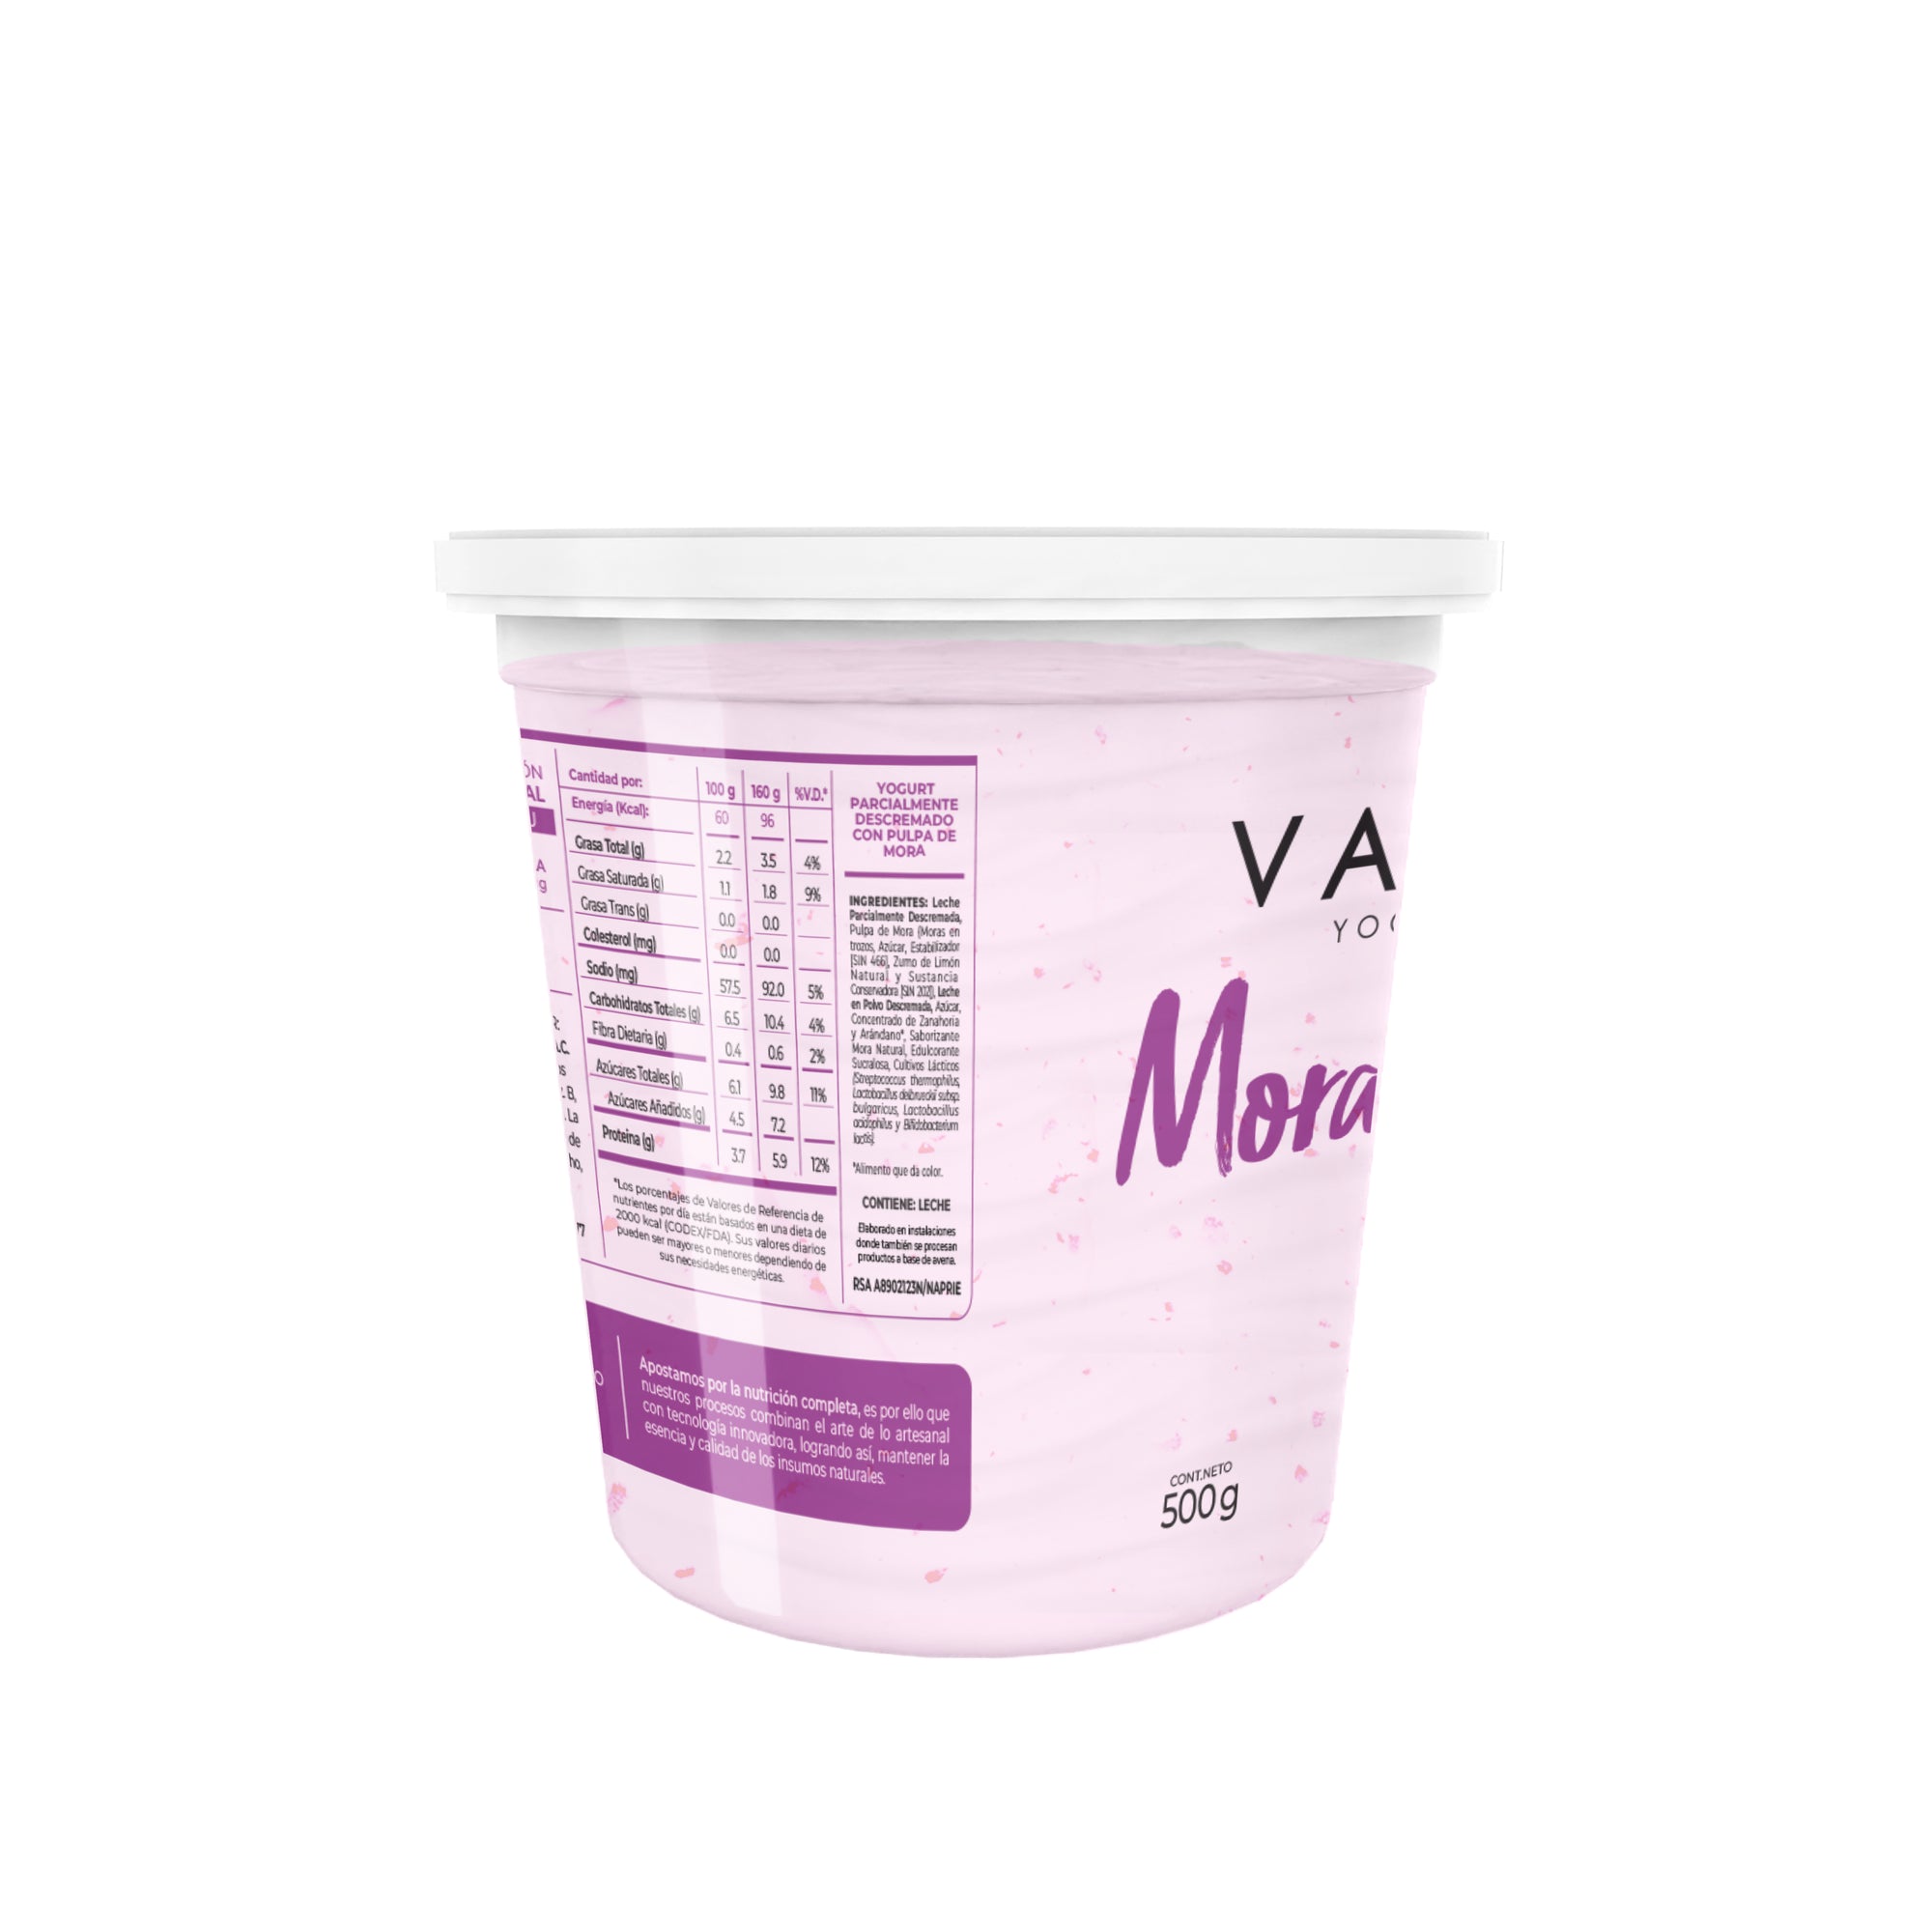 Yogurt Griego Vakimu Mora 500g